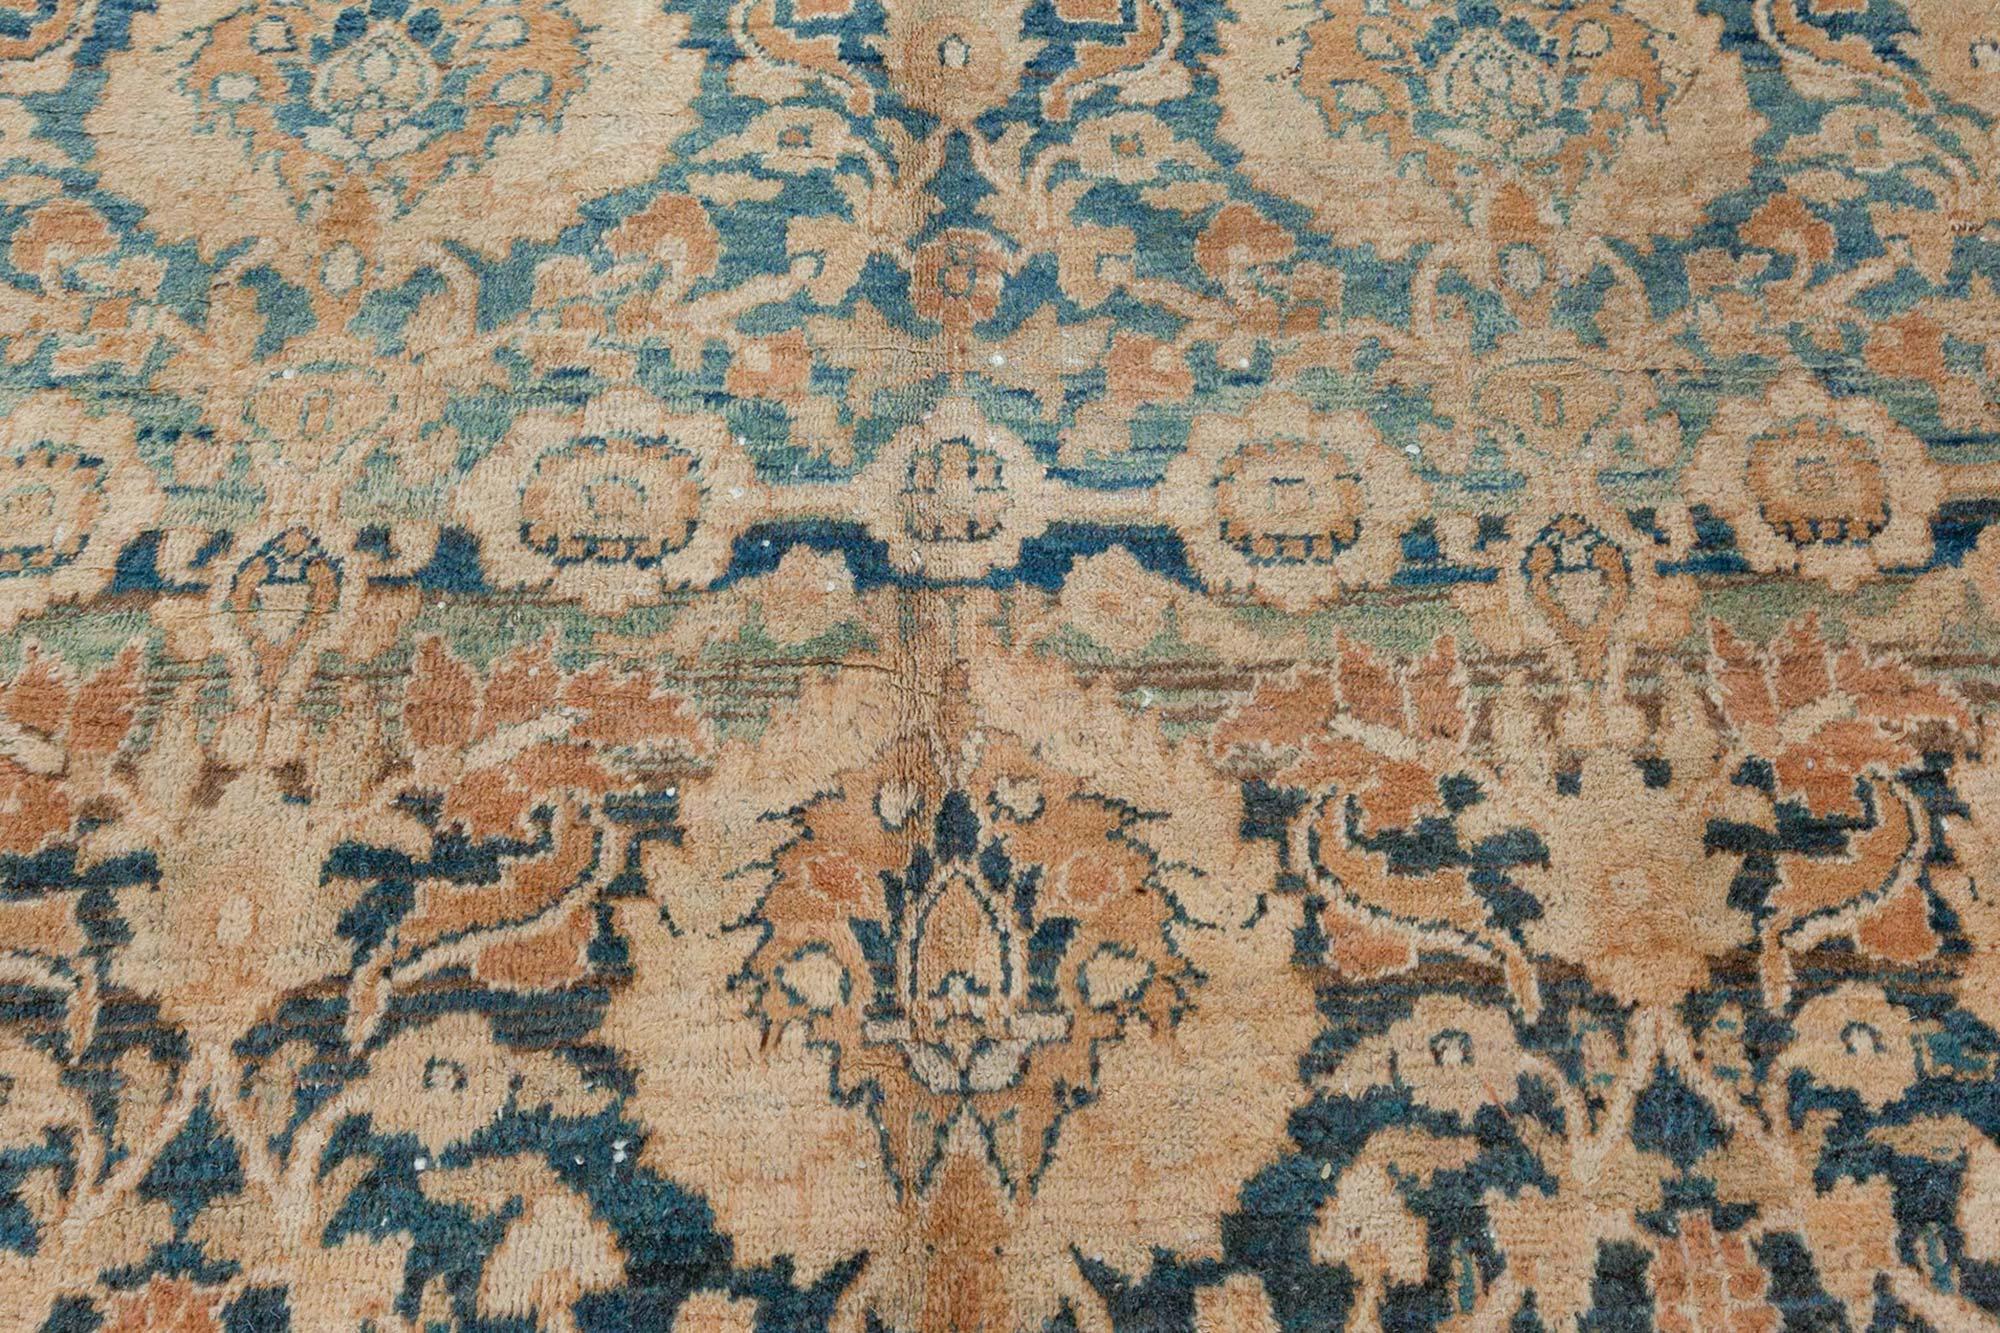 Antique Persian Meshad botanic handmade wool rug
Size: 6'6